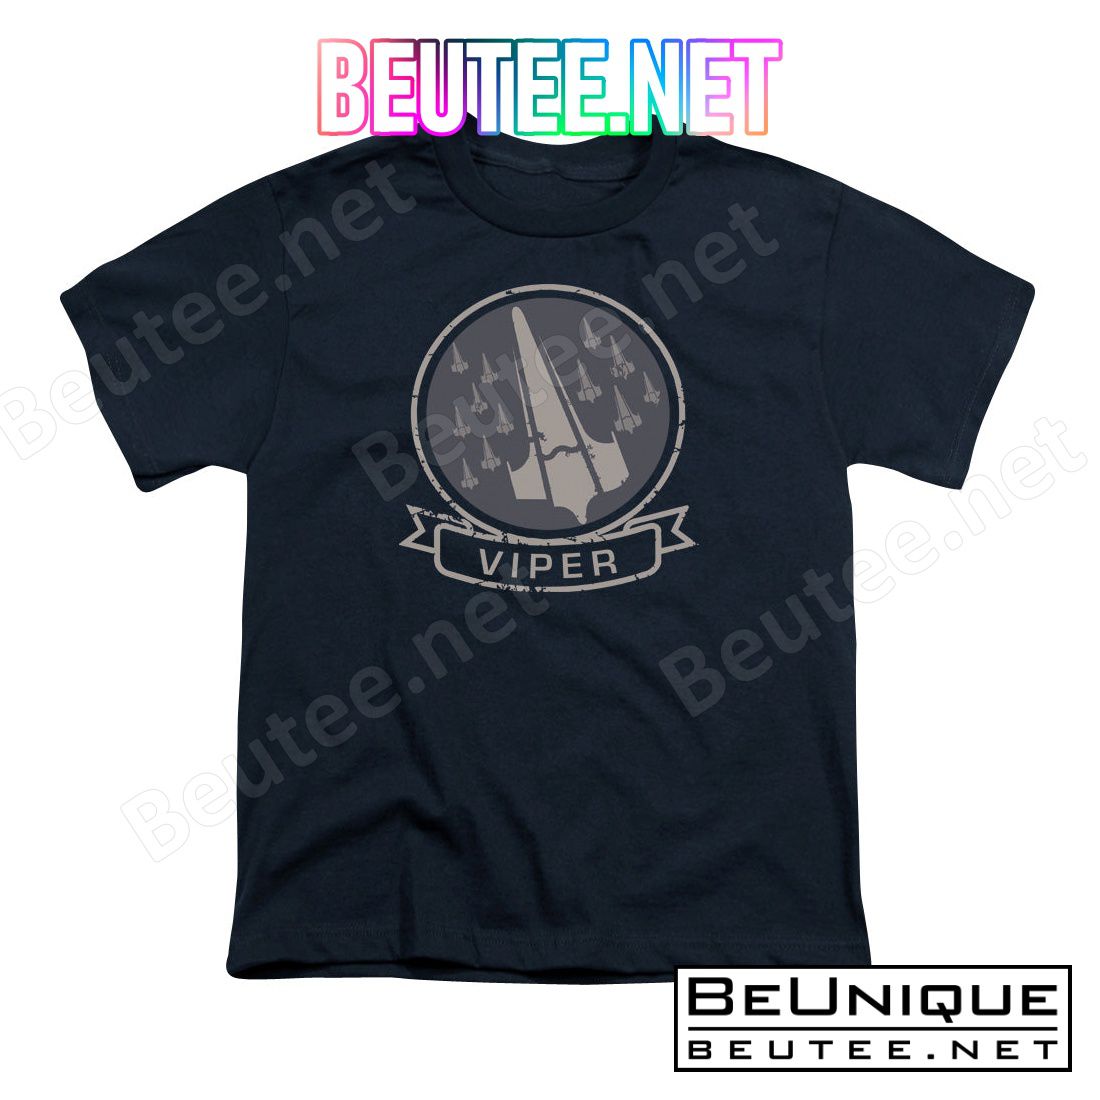 Battlestar Galactica (2004) Viper Squad Shirt